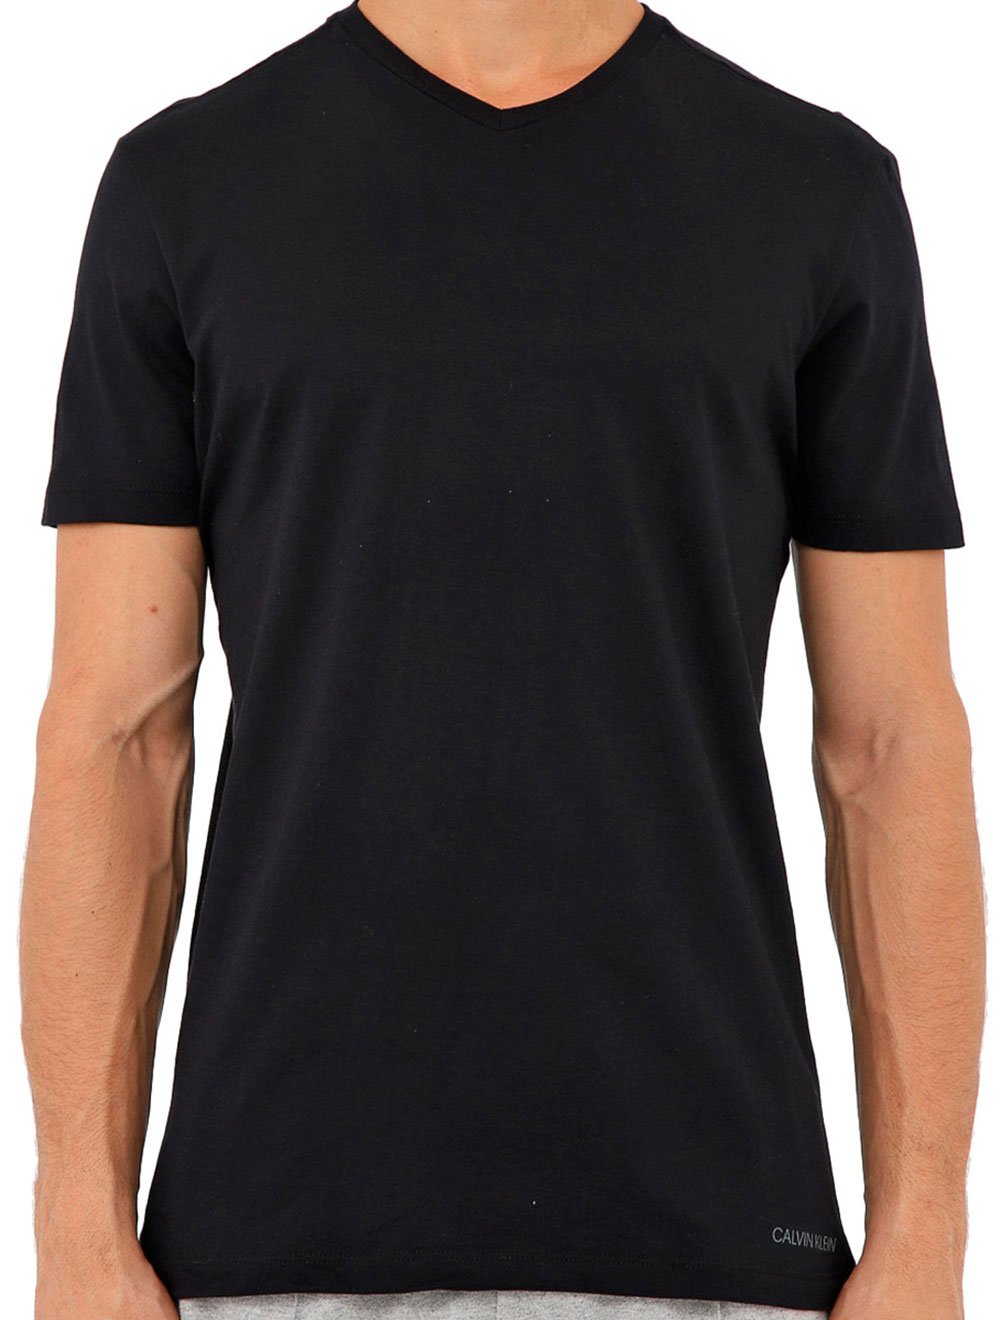 Kit 2 Camisetas Masculina Gola Careca - Calvin Klein Underwear - Branco e  Preto - Shop2gether